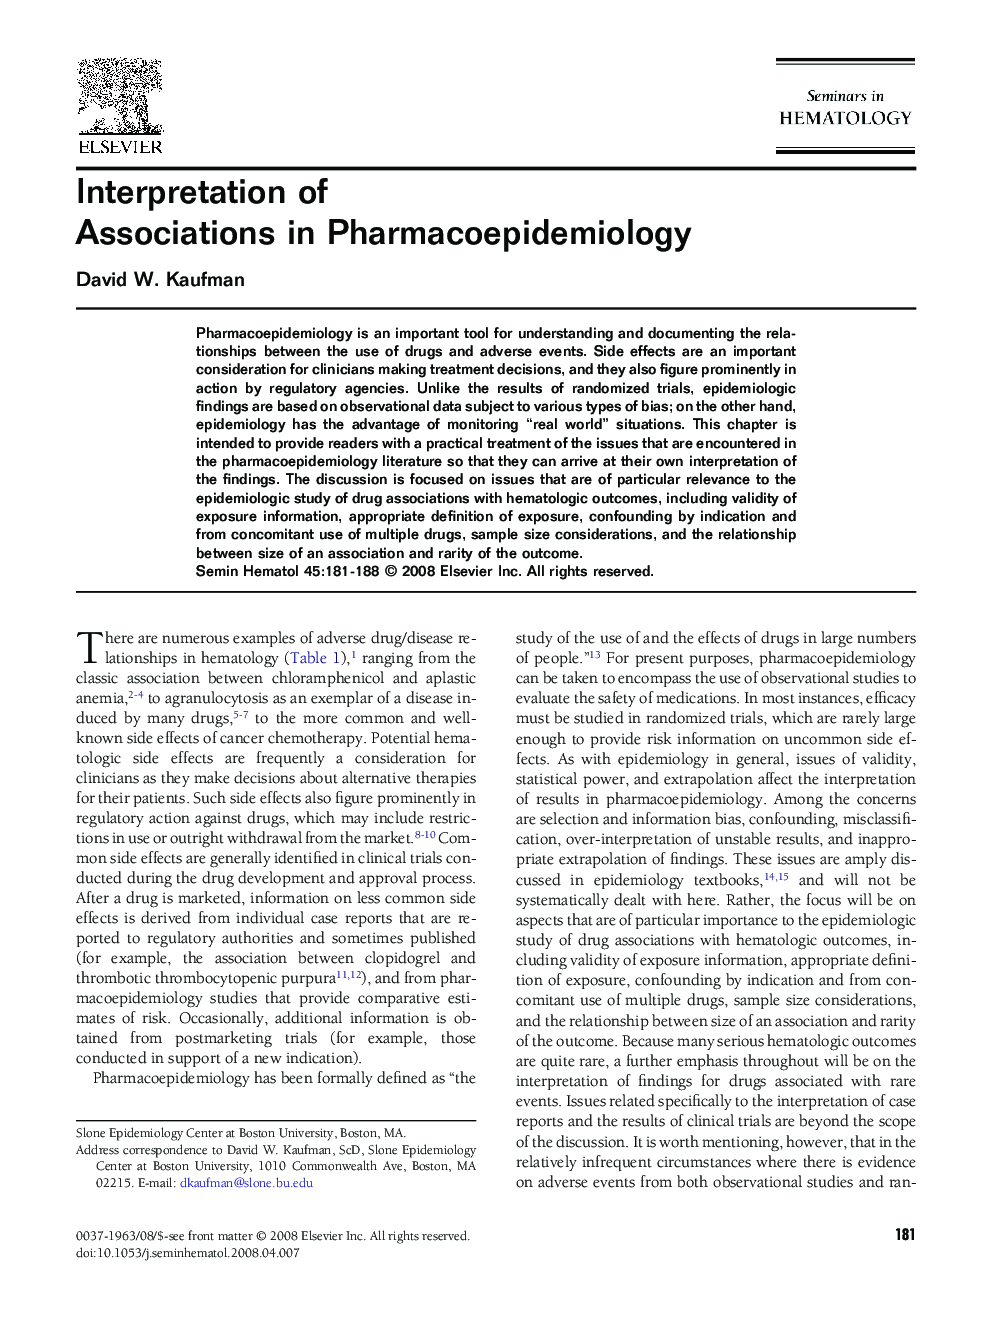 Interpretation of Associations in Pharmacoepidemiology